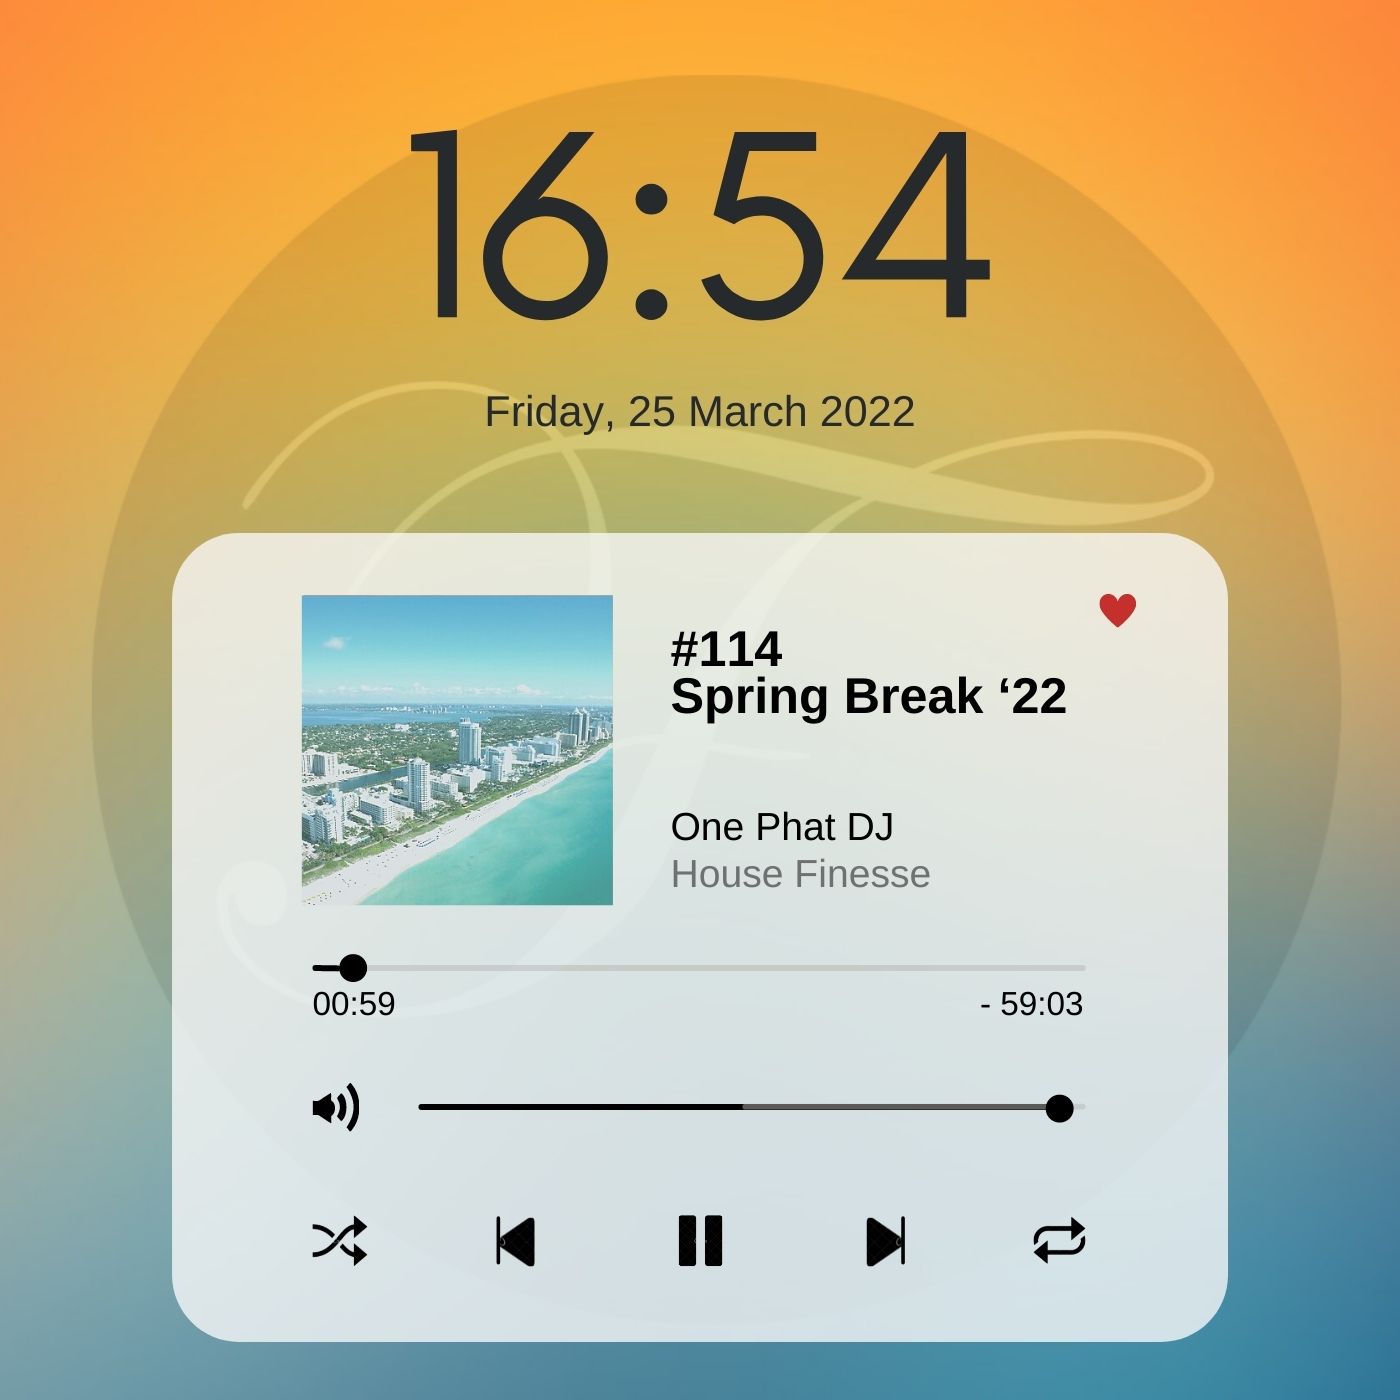 Spring Break ’22 with One Phat DJ